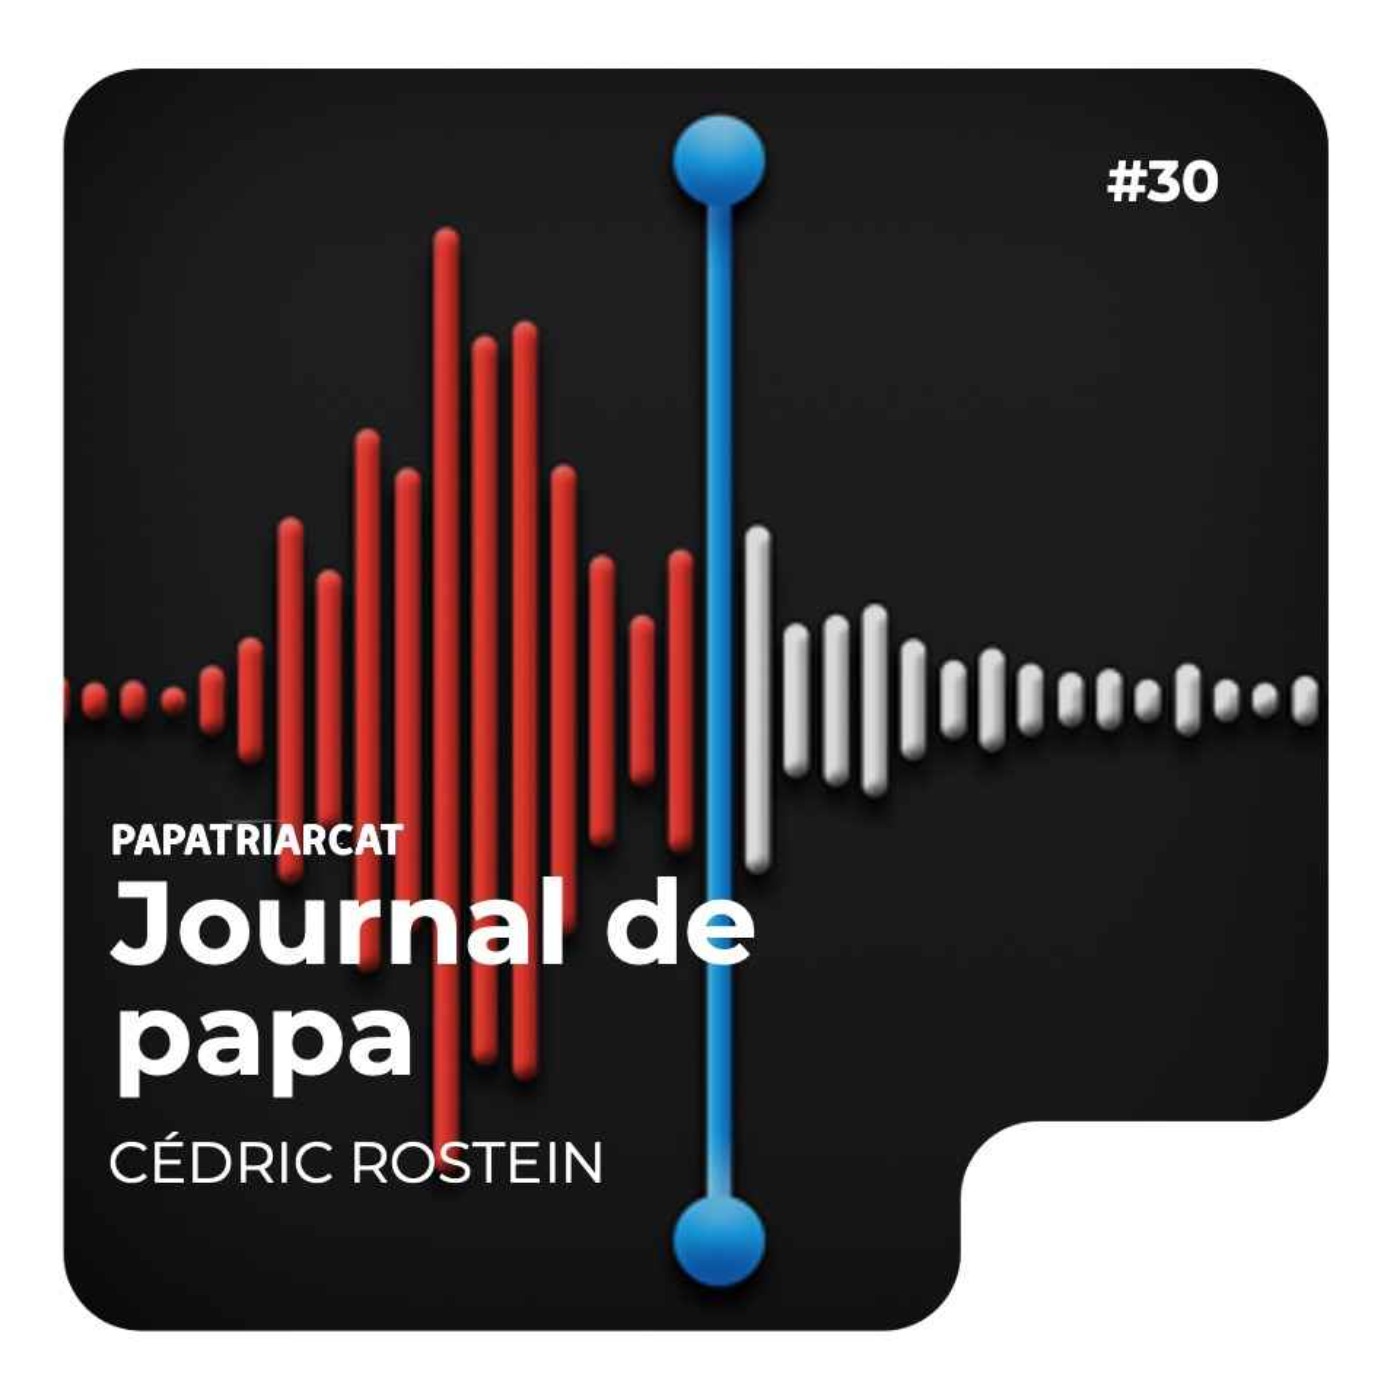 Journal de papa #30